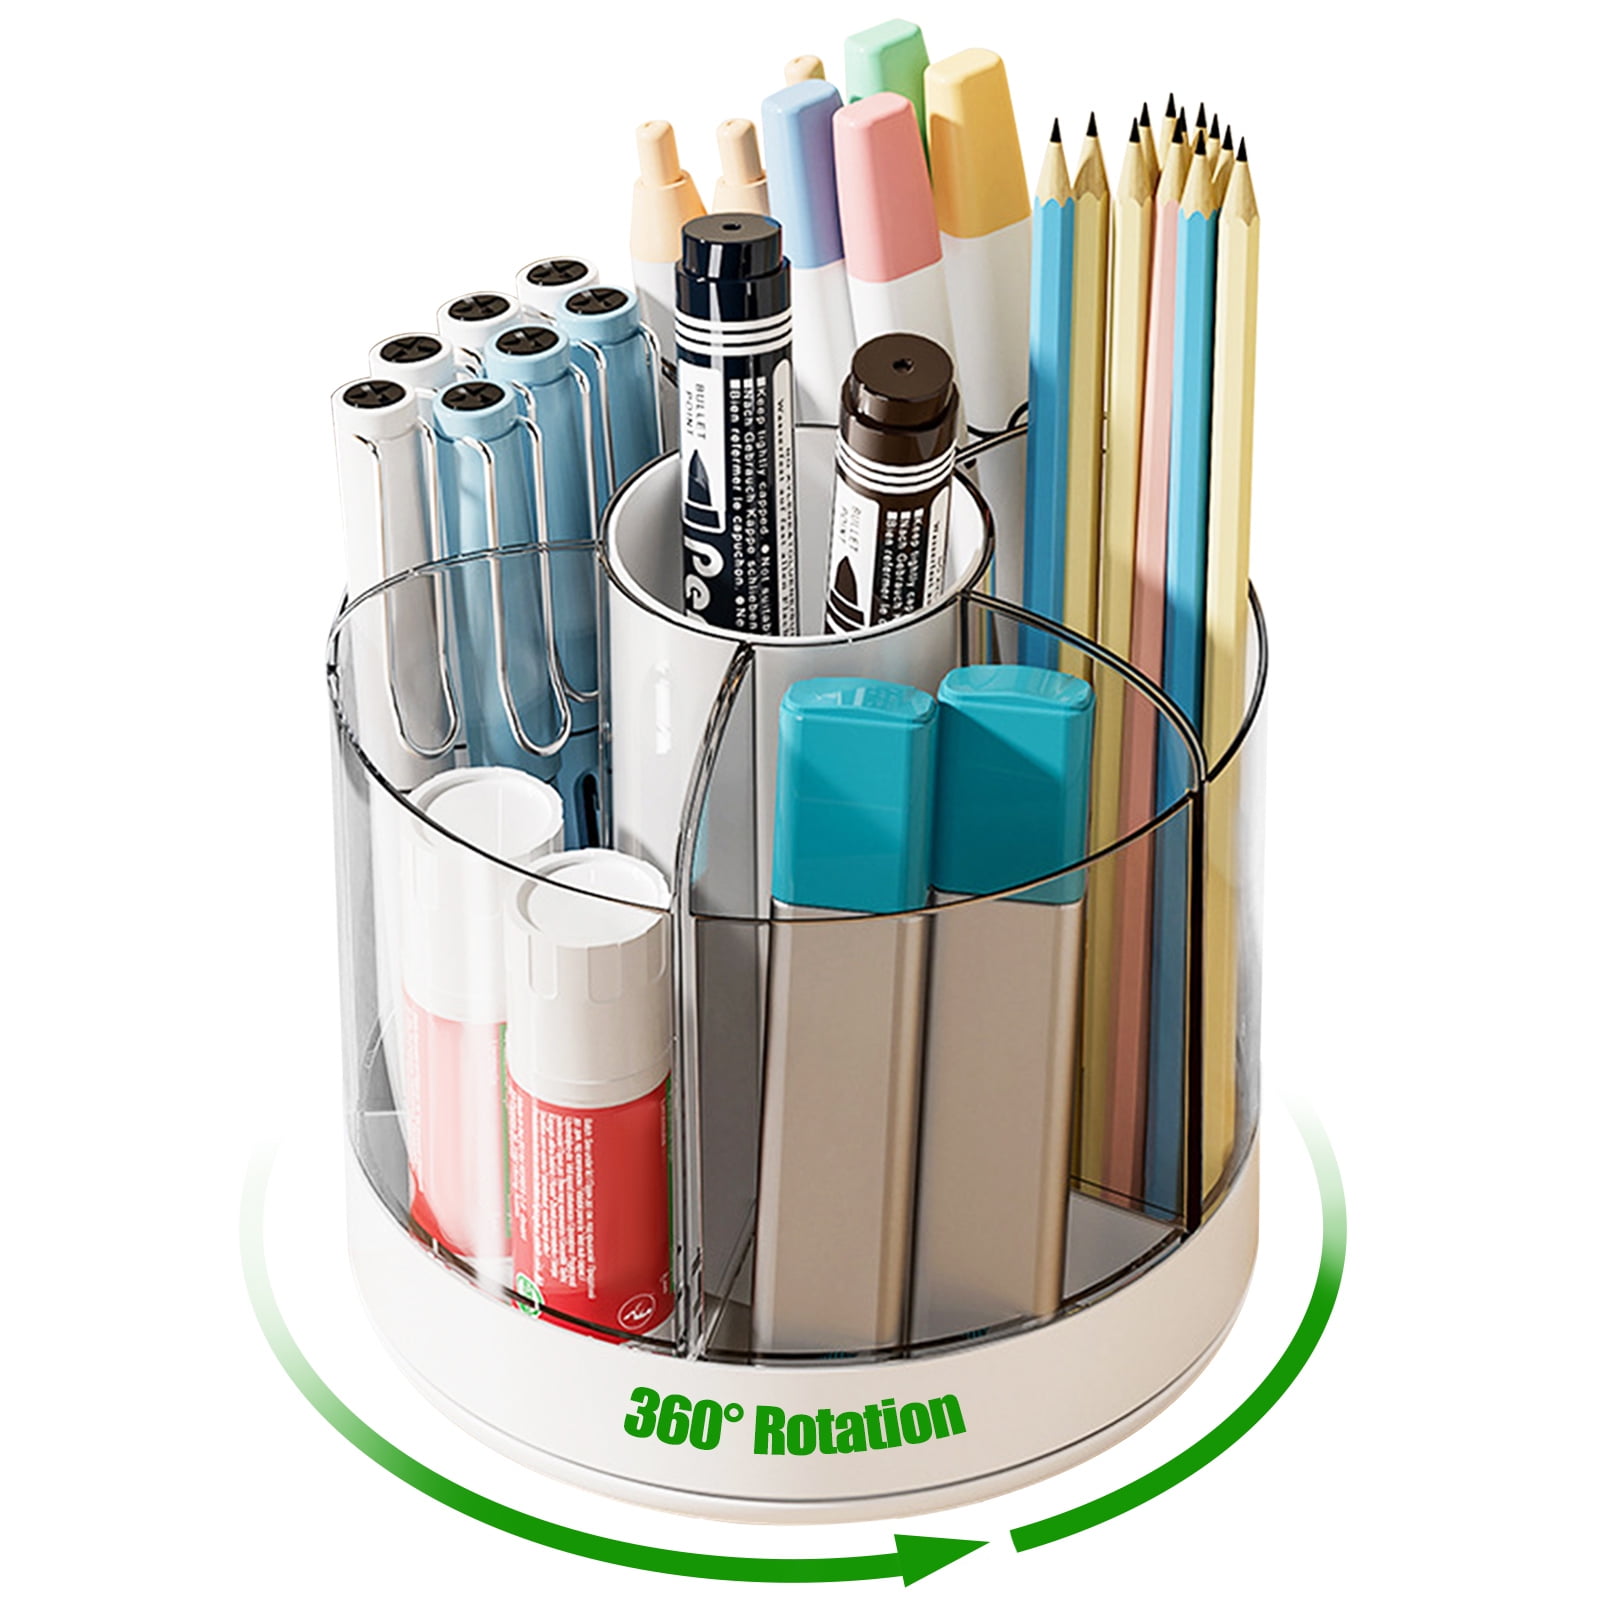 LANZON Pencil Shaped Pen Holder for Desk | Dustproof Desktop Organizer Case  | Makeup Brushes Holder | Cosmetic Brush Storage (Black)